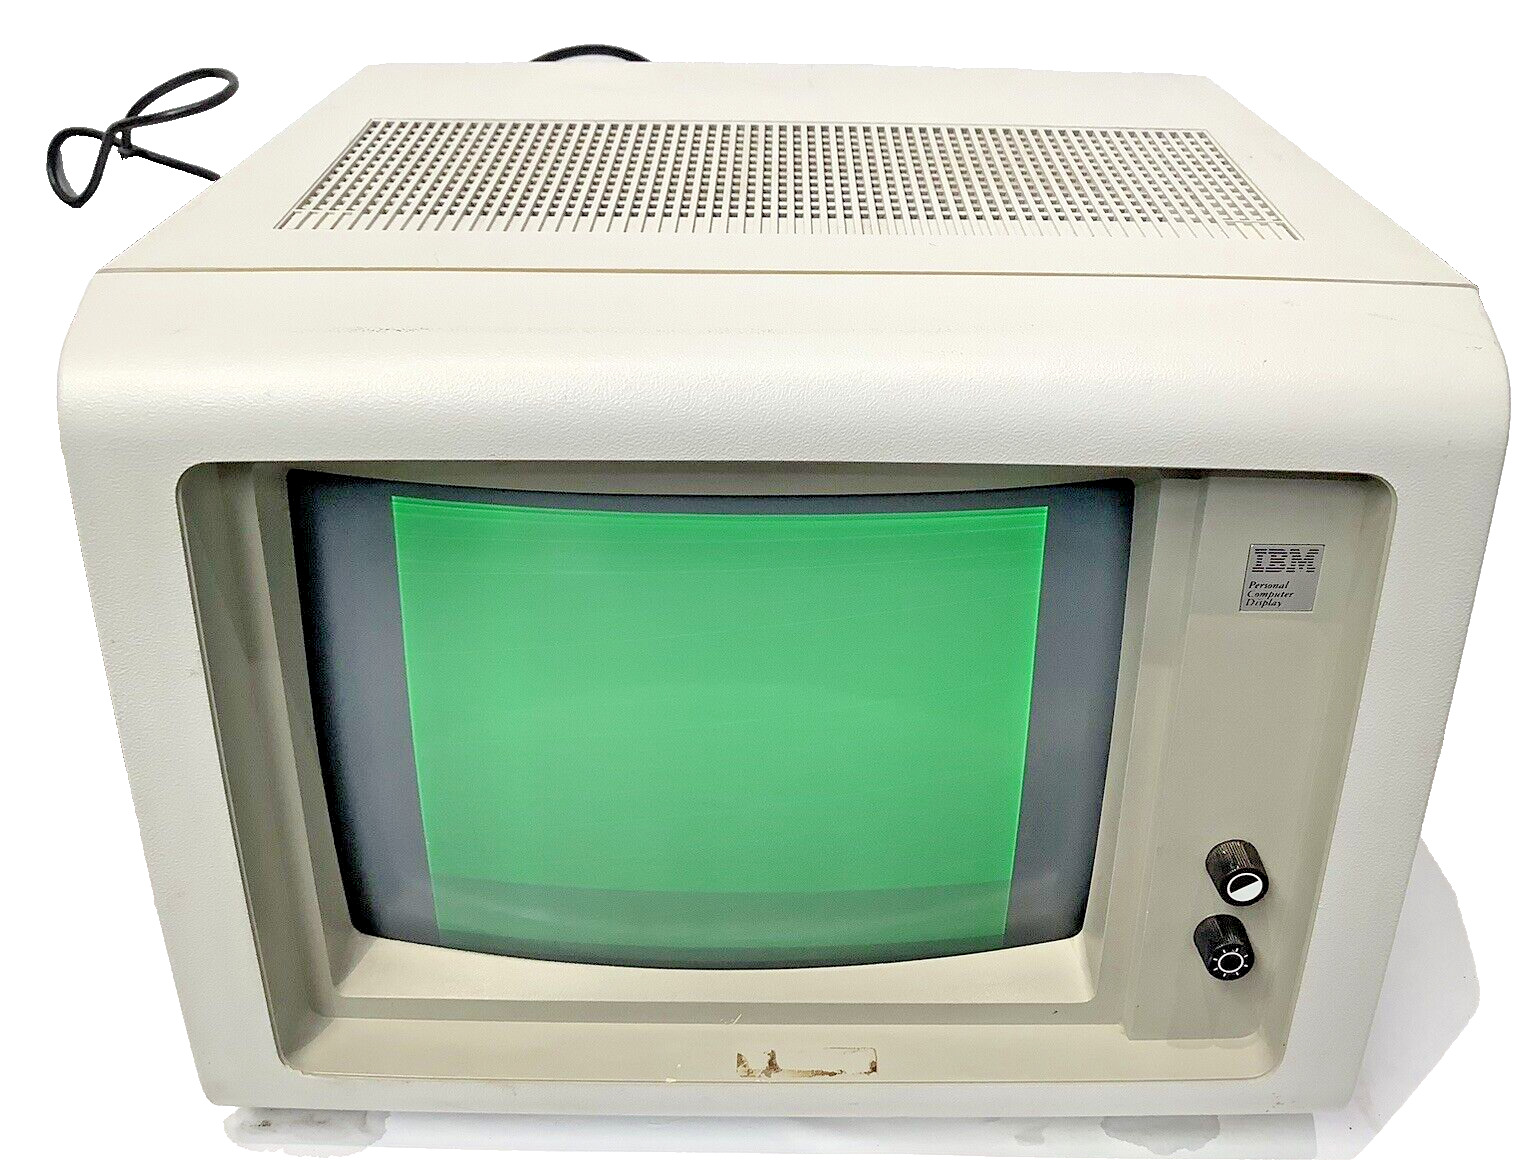 Vintage IBM 5151 Monochrome Monitor Personal Computer Display - TESTED